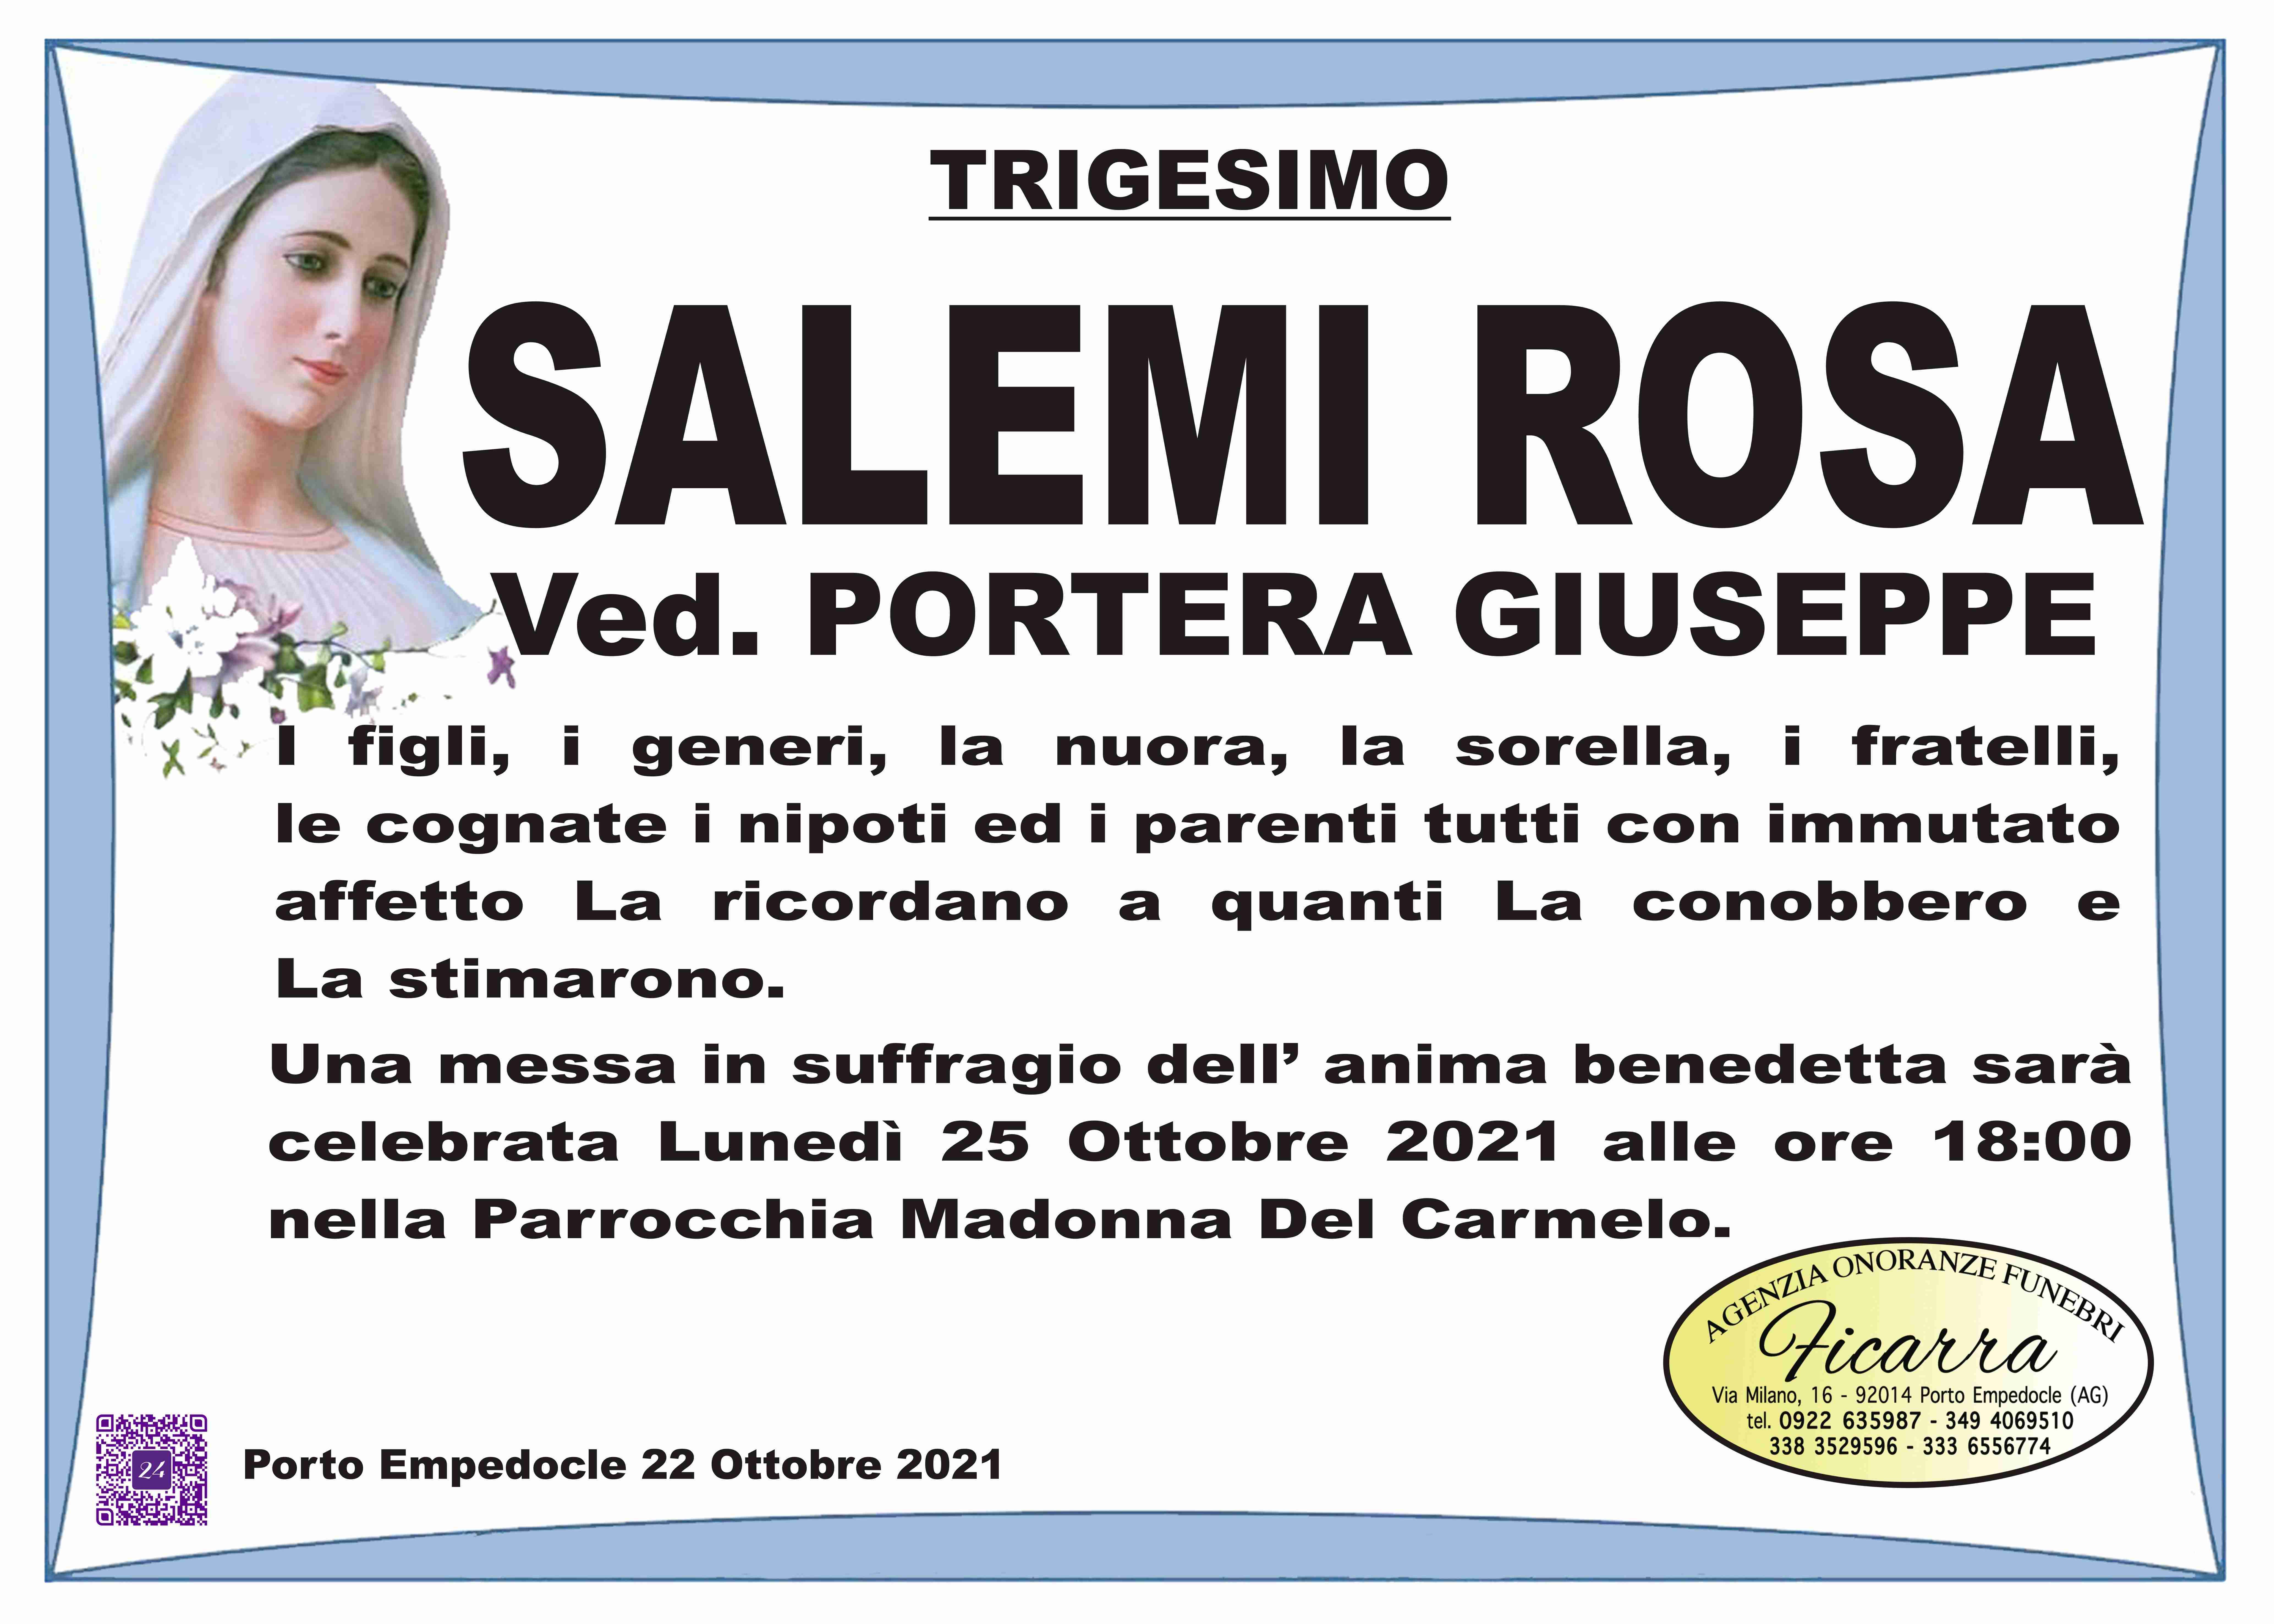 Rosa Salemi